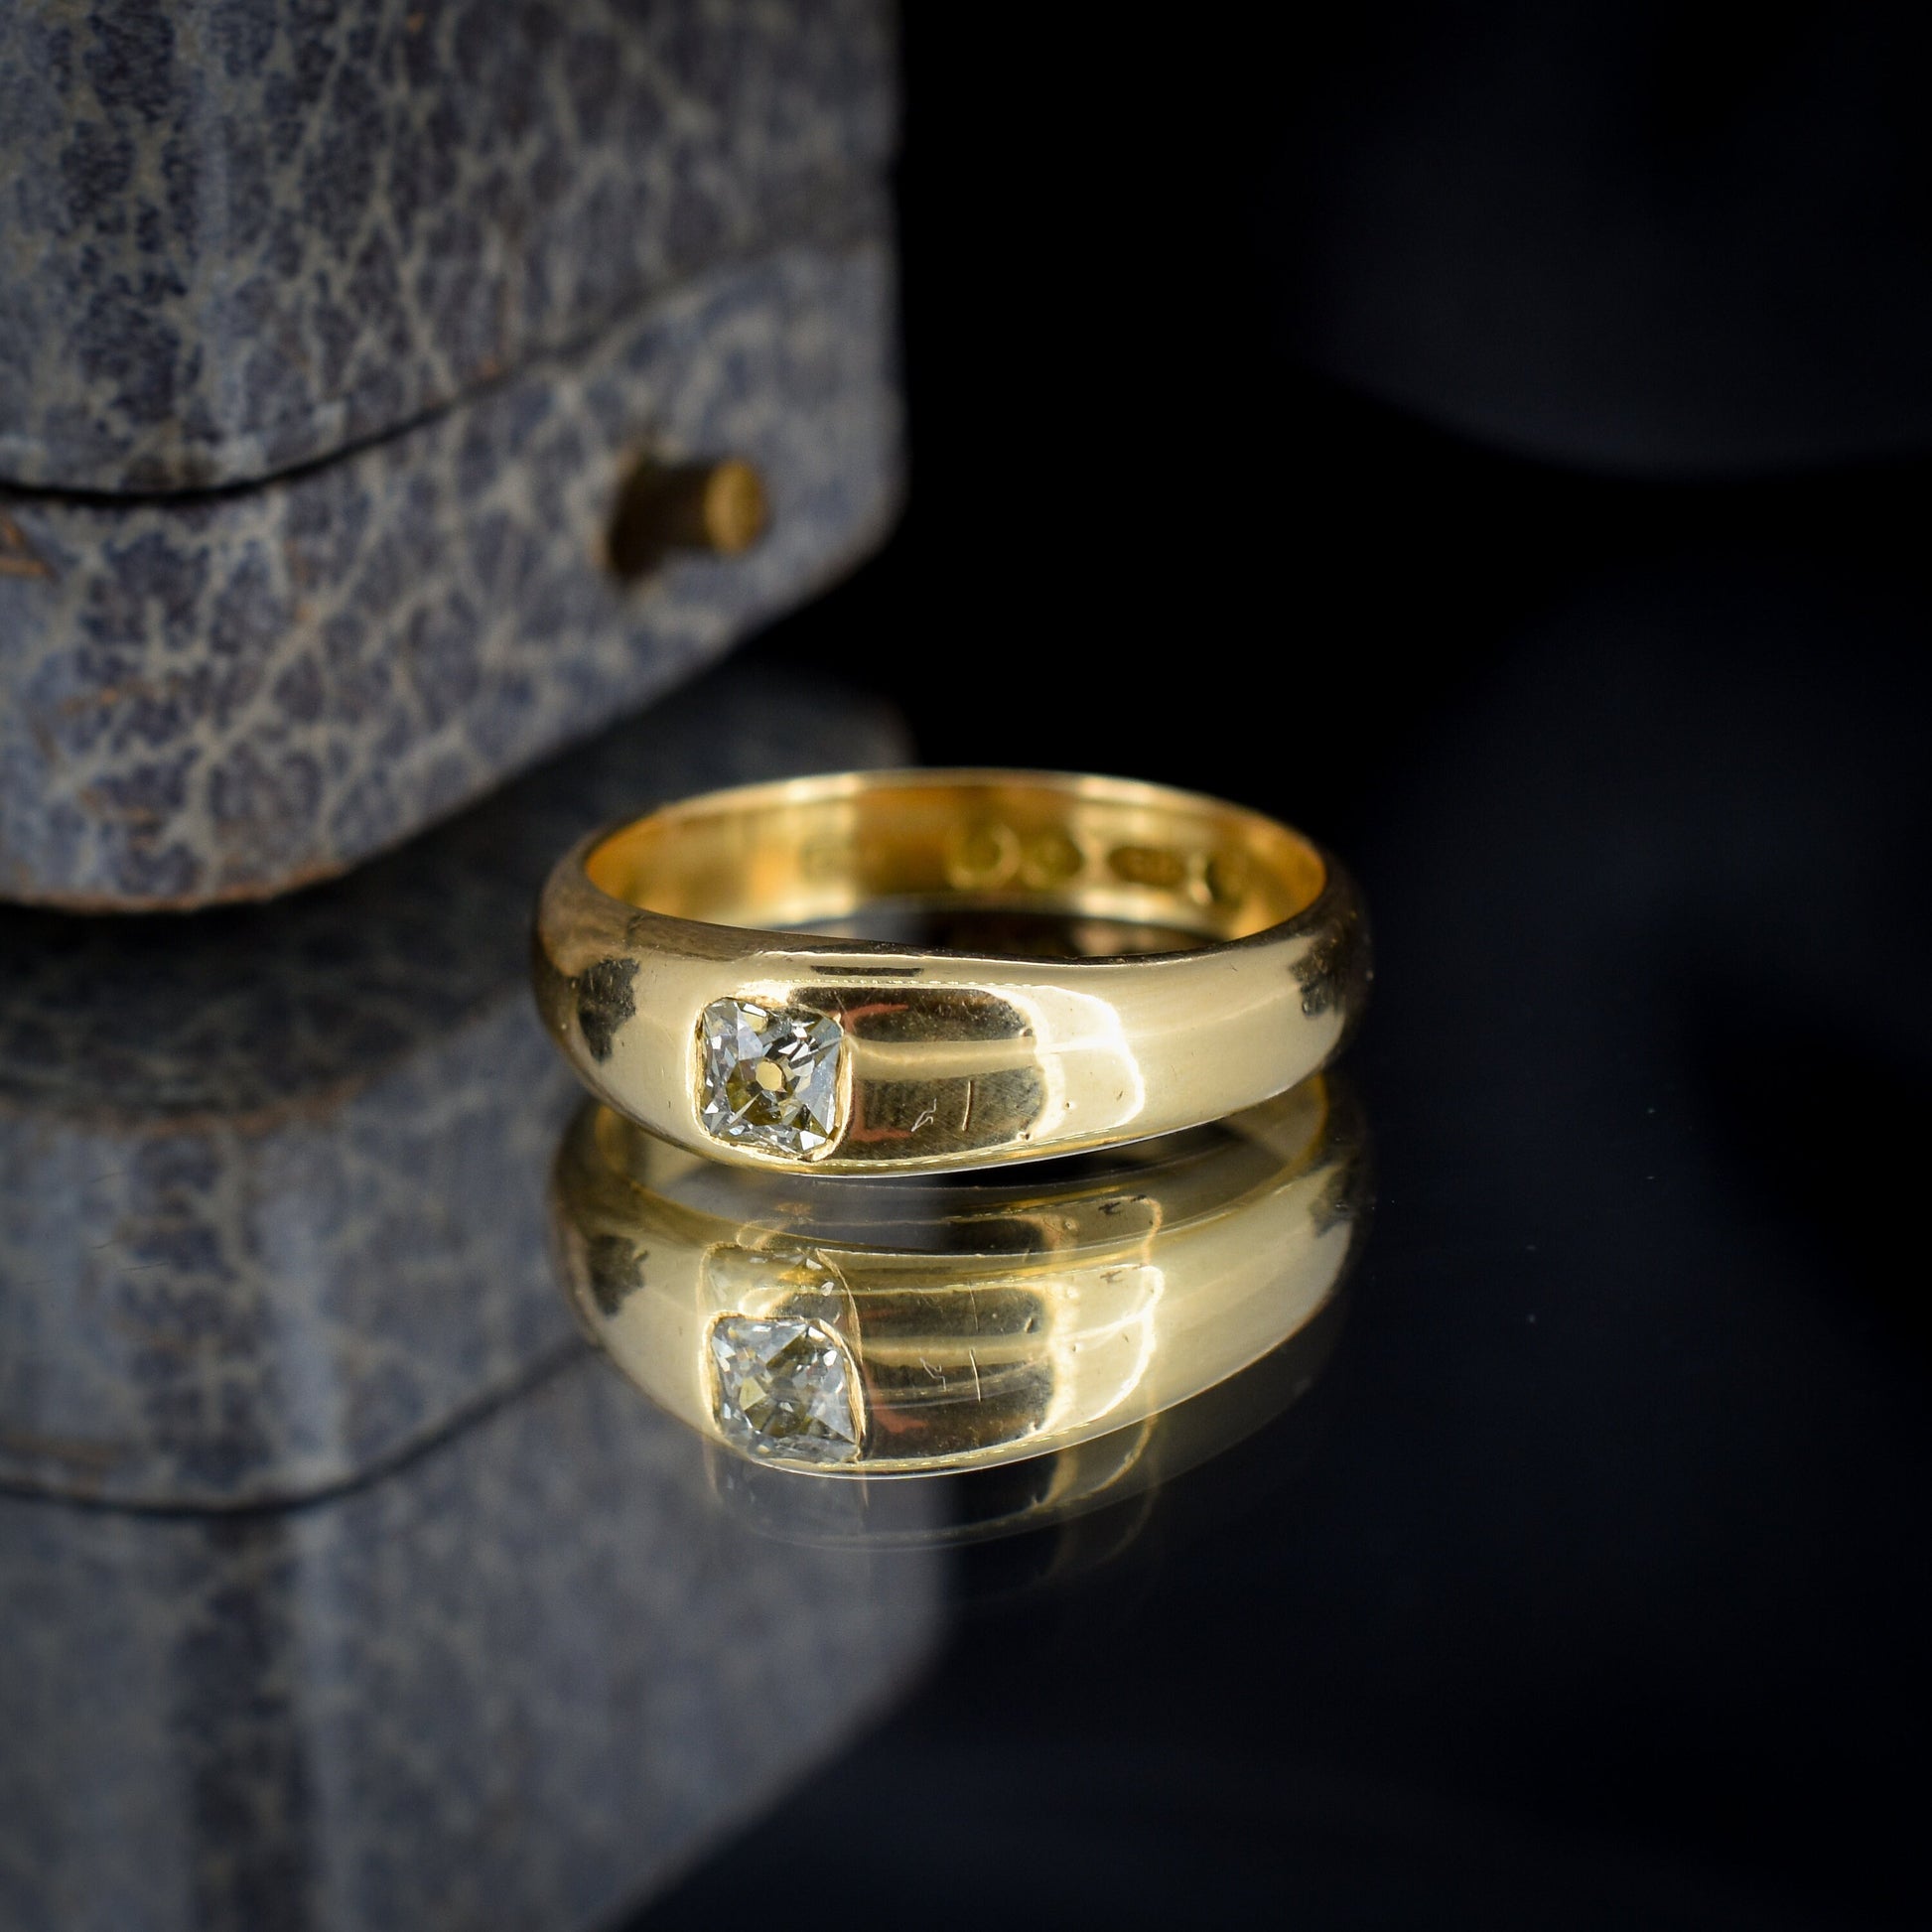 Antique Victorian 18ct Yellow Gold Diamond Gypsy Ring - 0.25ct Diamond